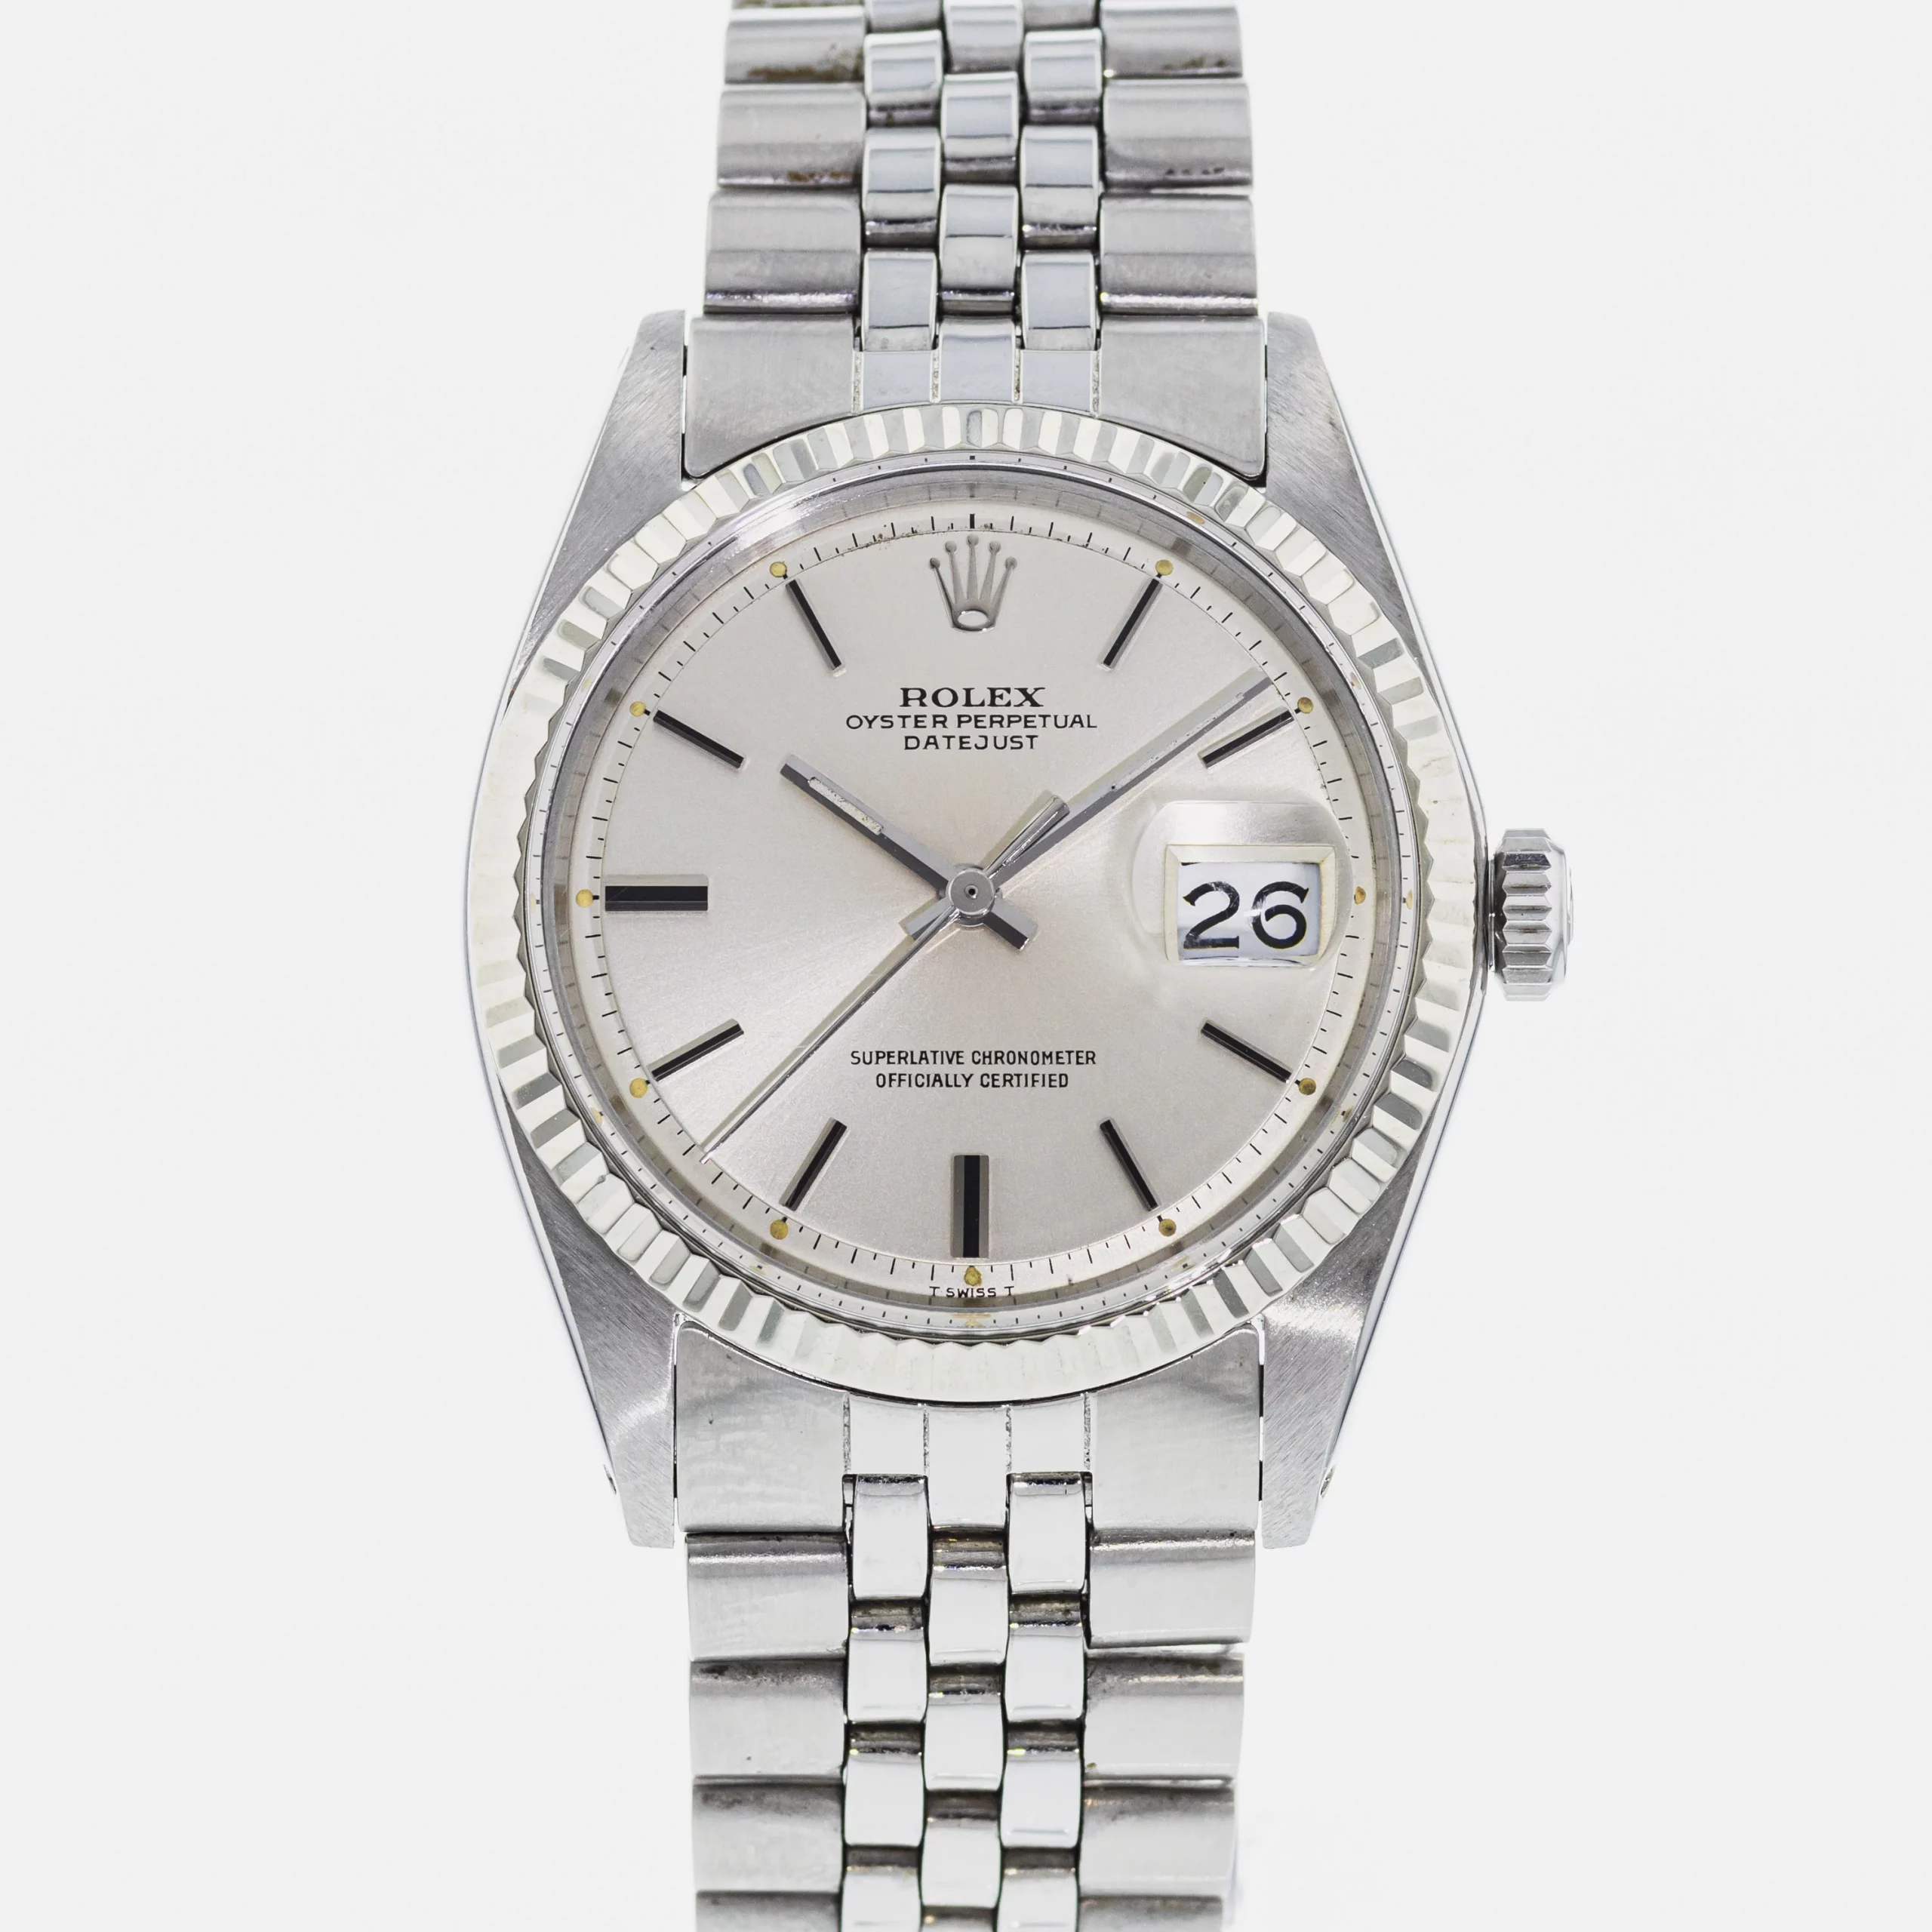 Orologio Rolex vintage usati prezzi uomo